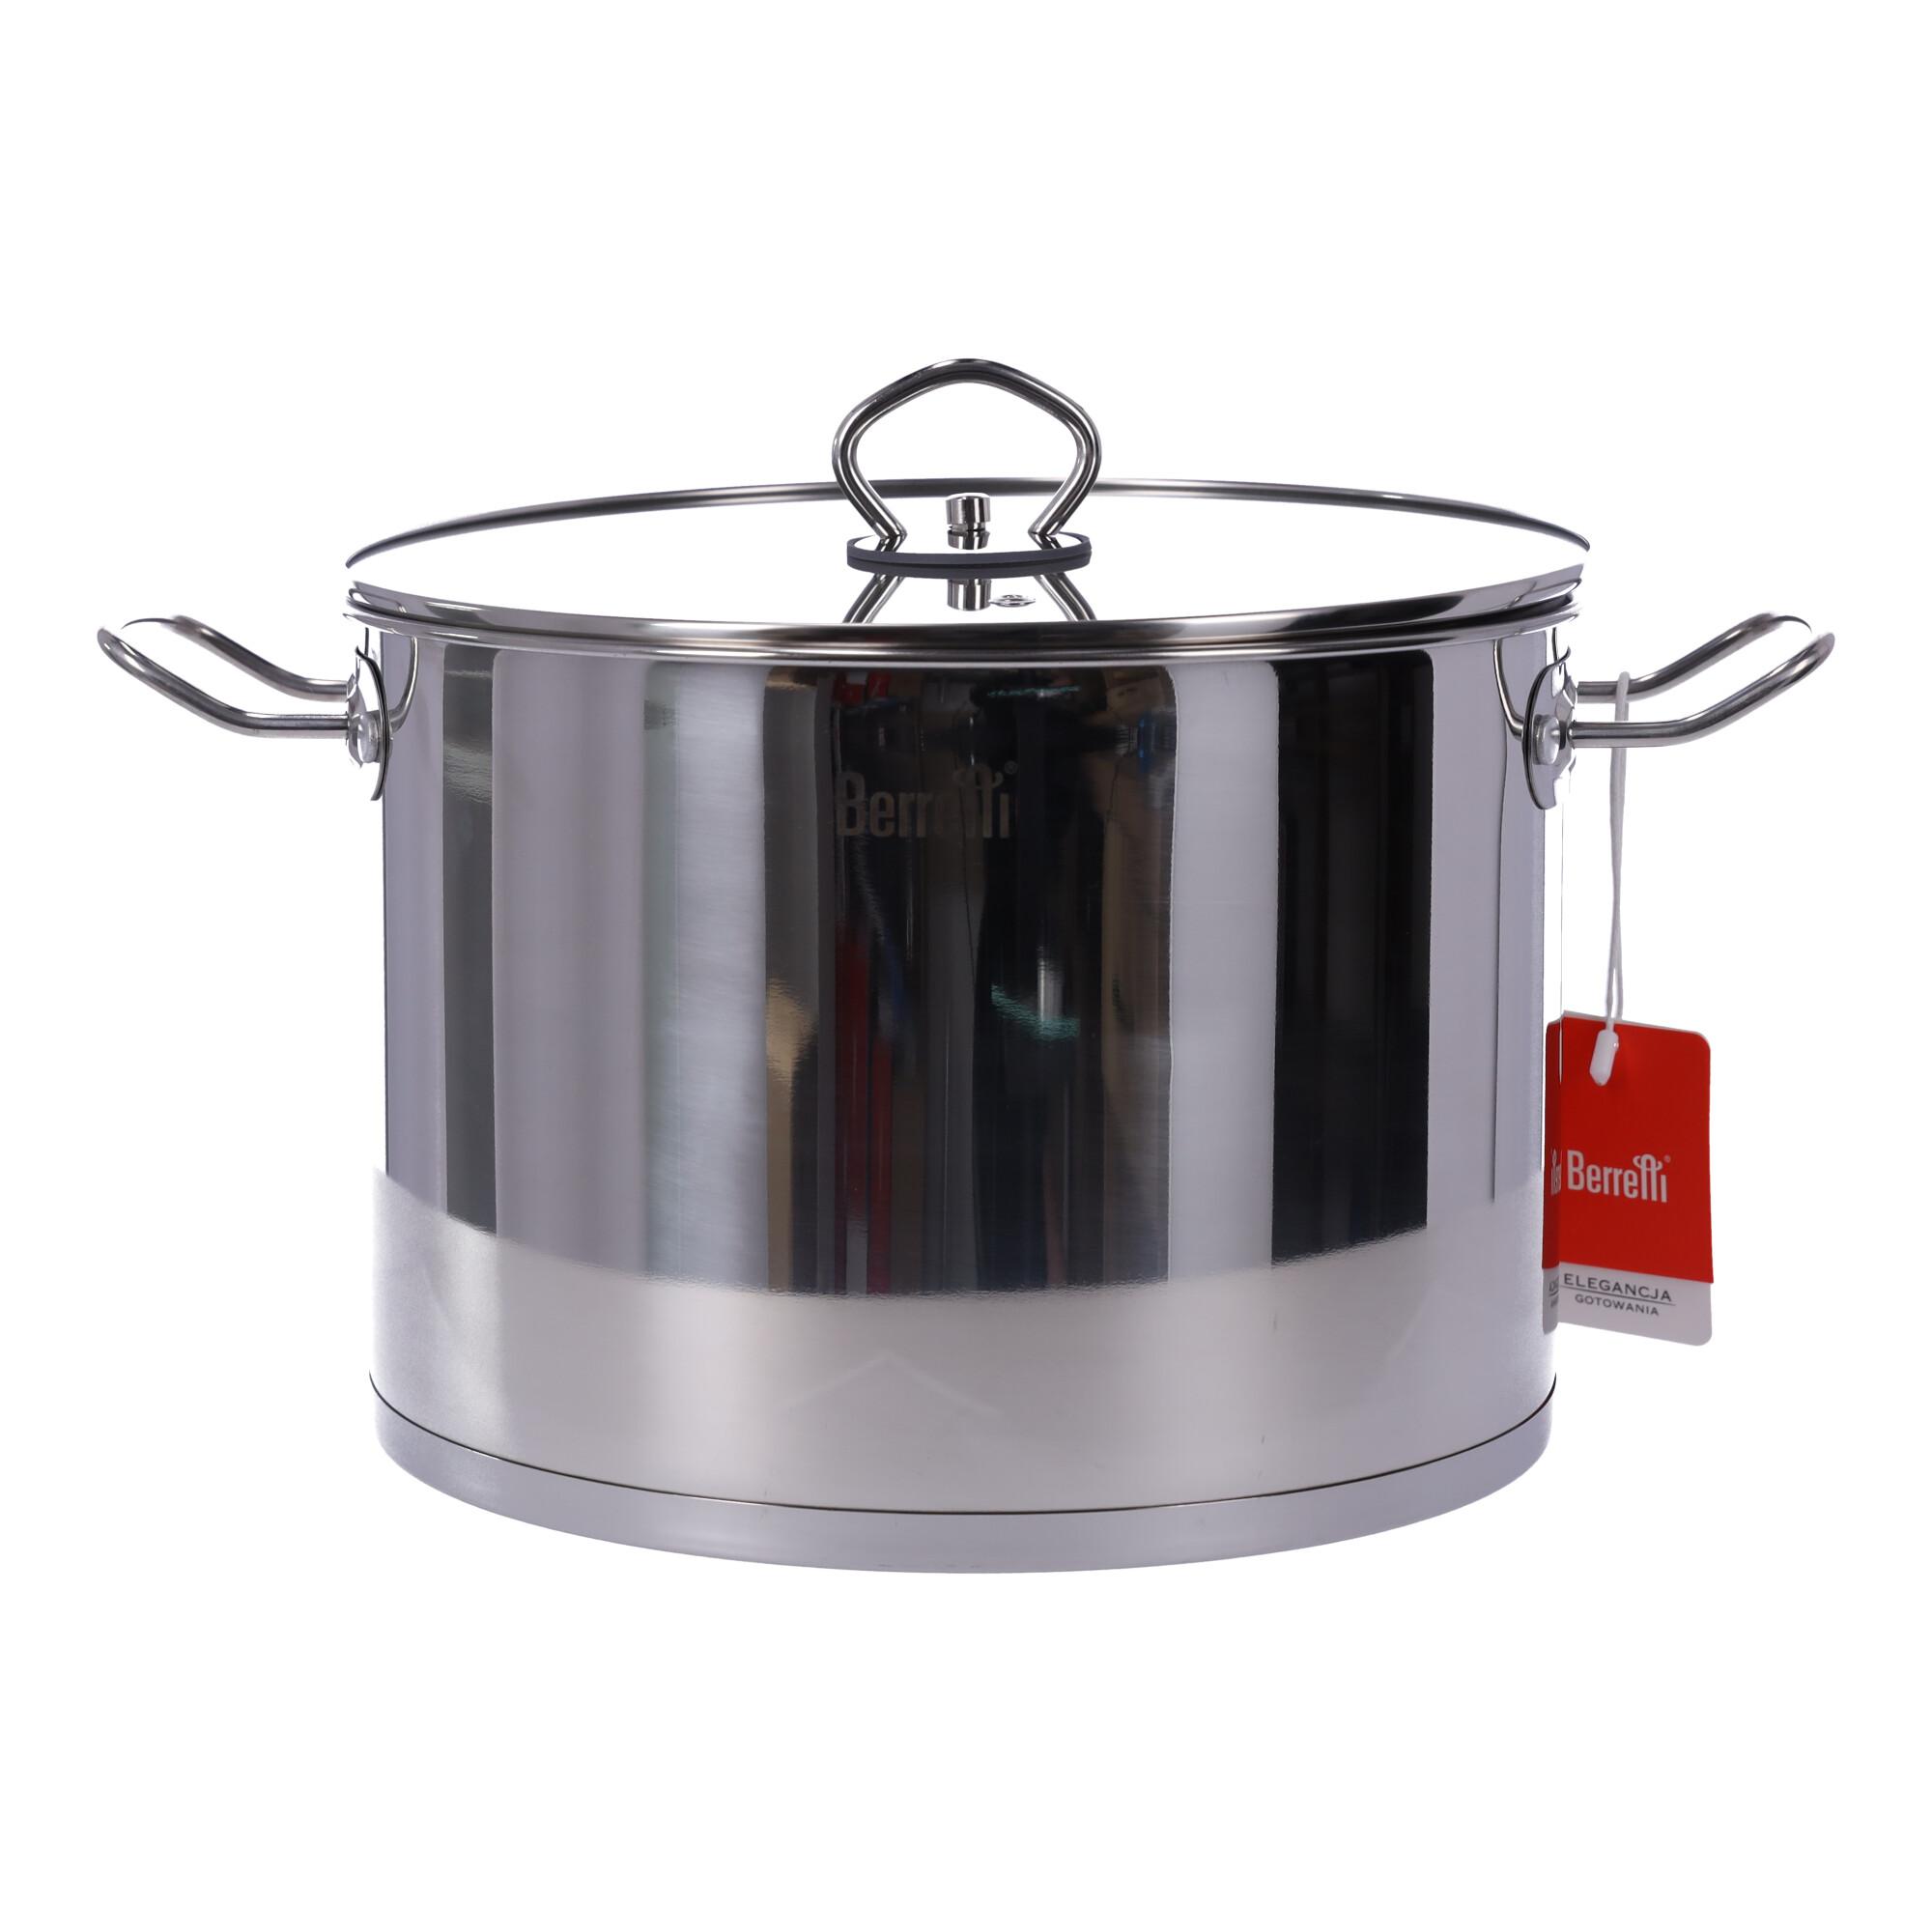 Stainless steel pot with lid Gemini BERRETTI, 26 cm